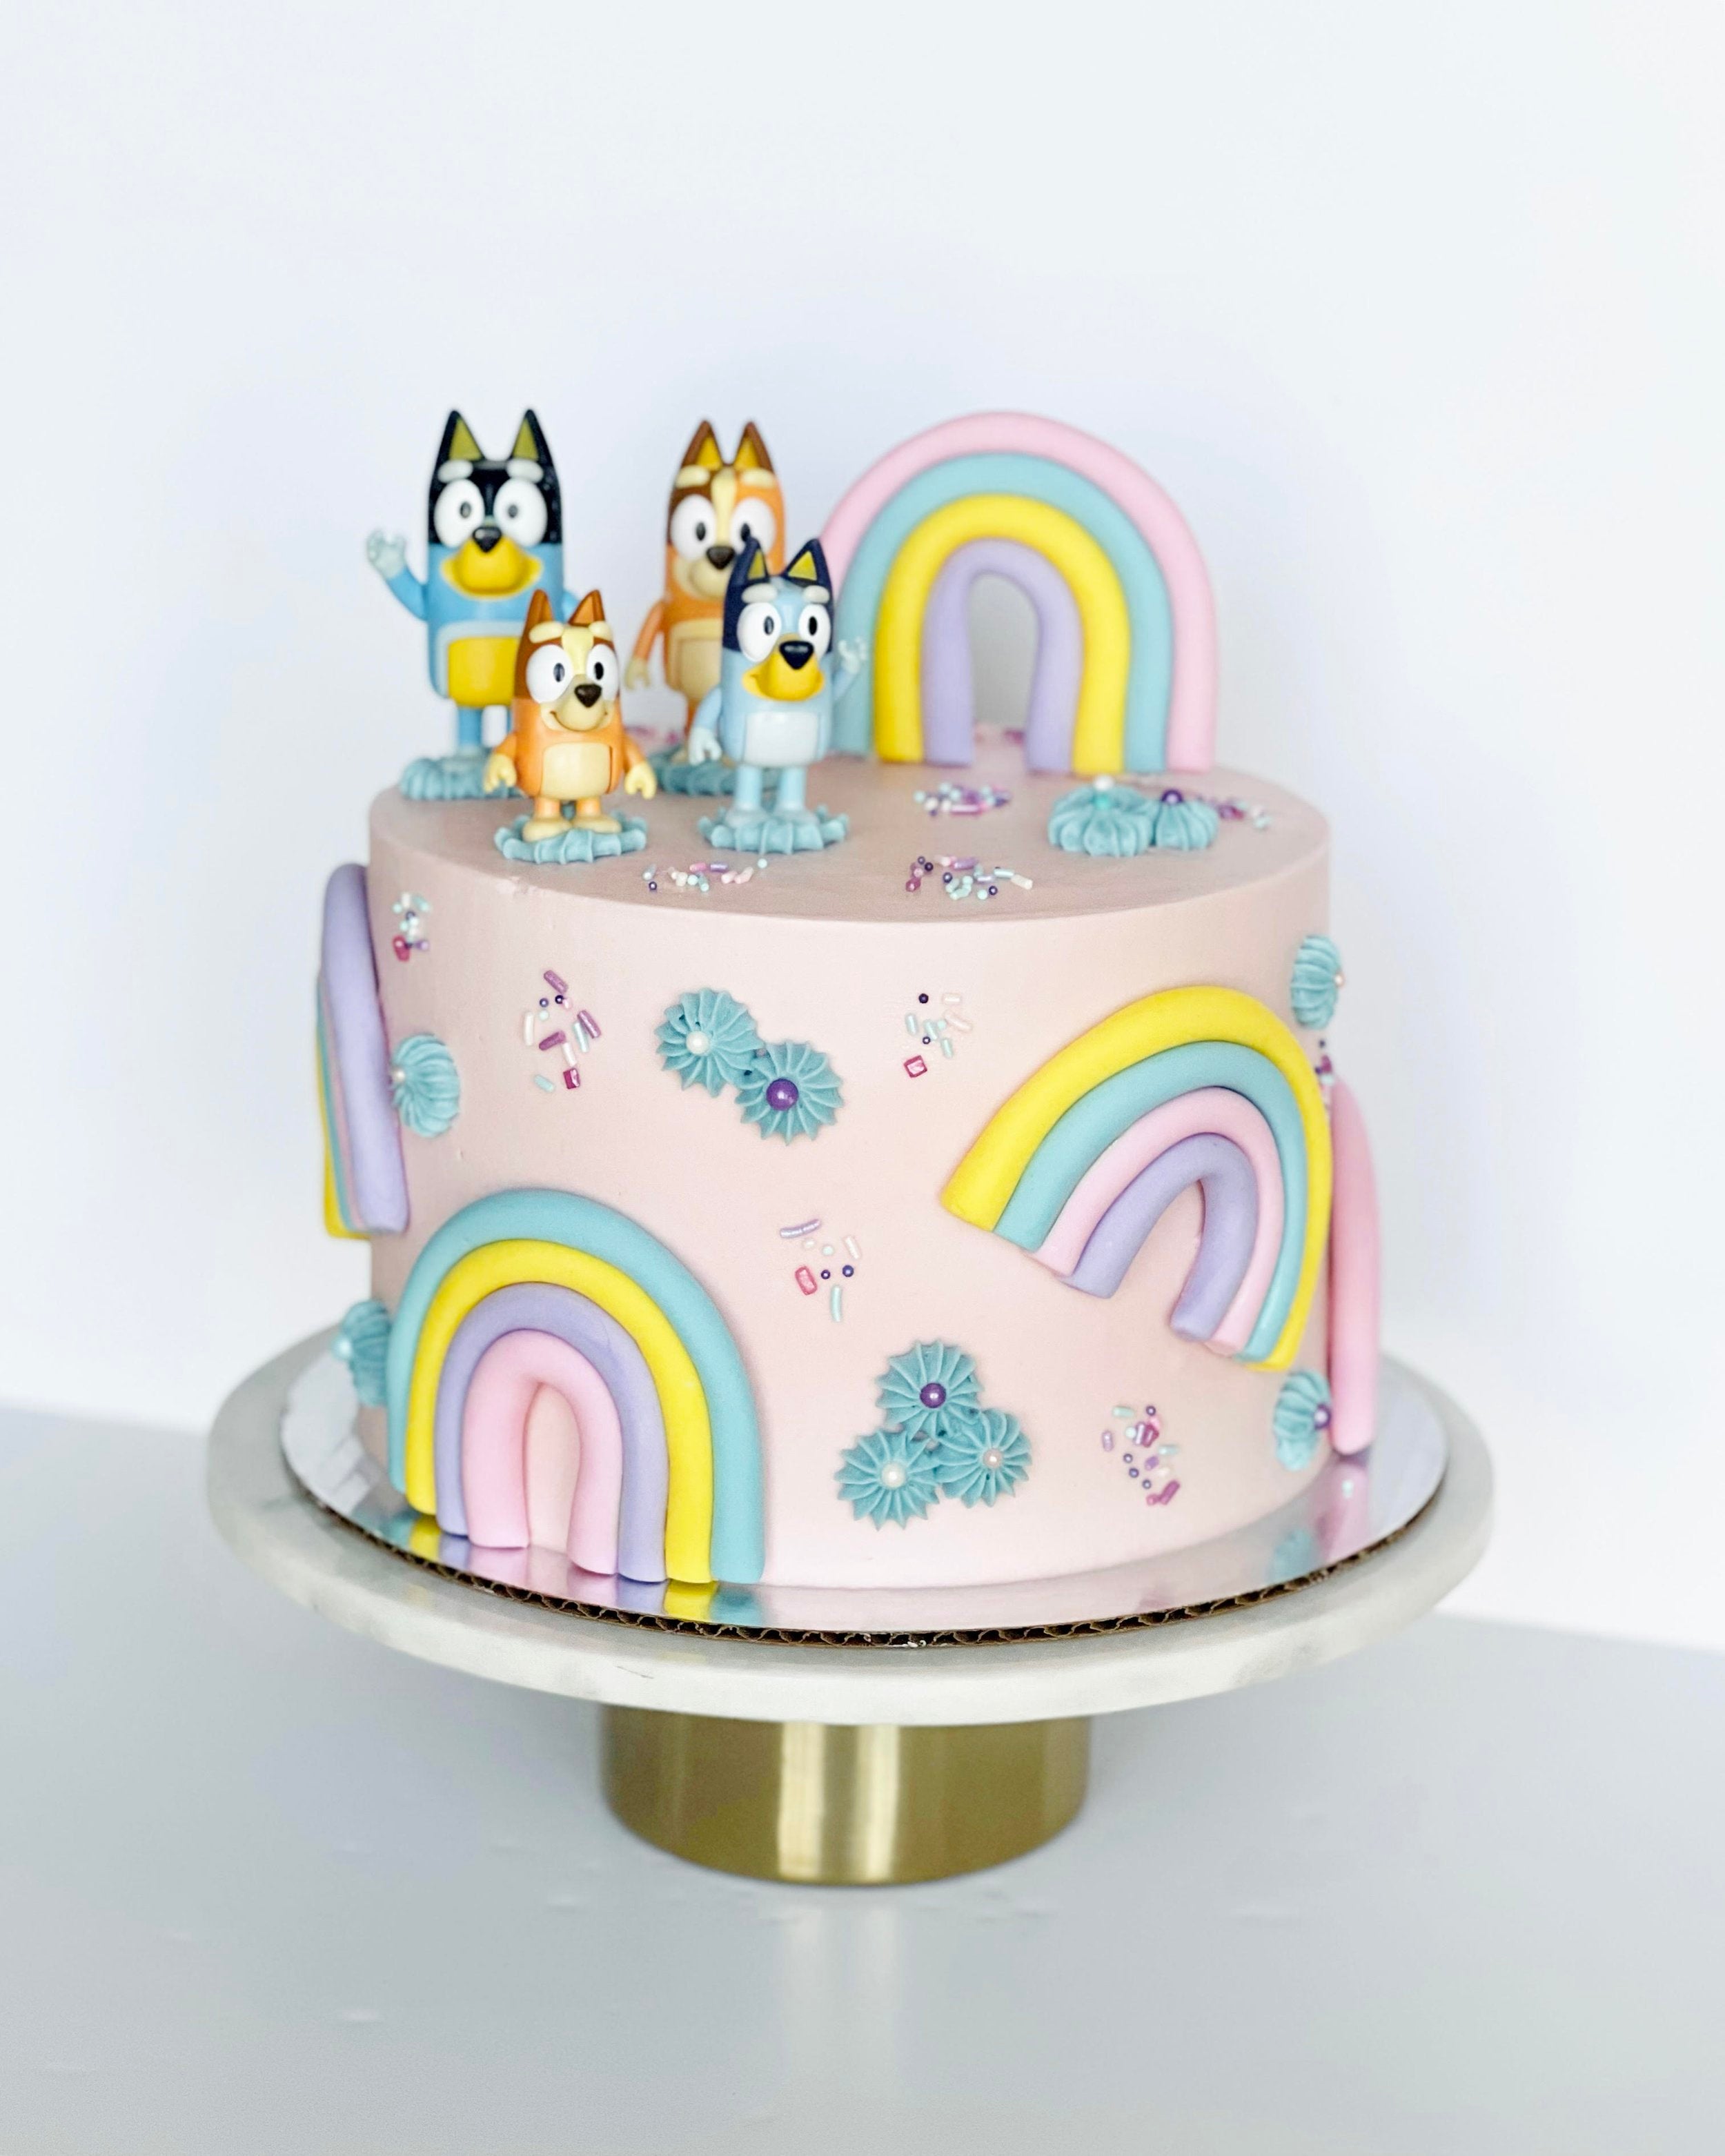 Bespoke Birthday Cakes | Character Cake Designs